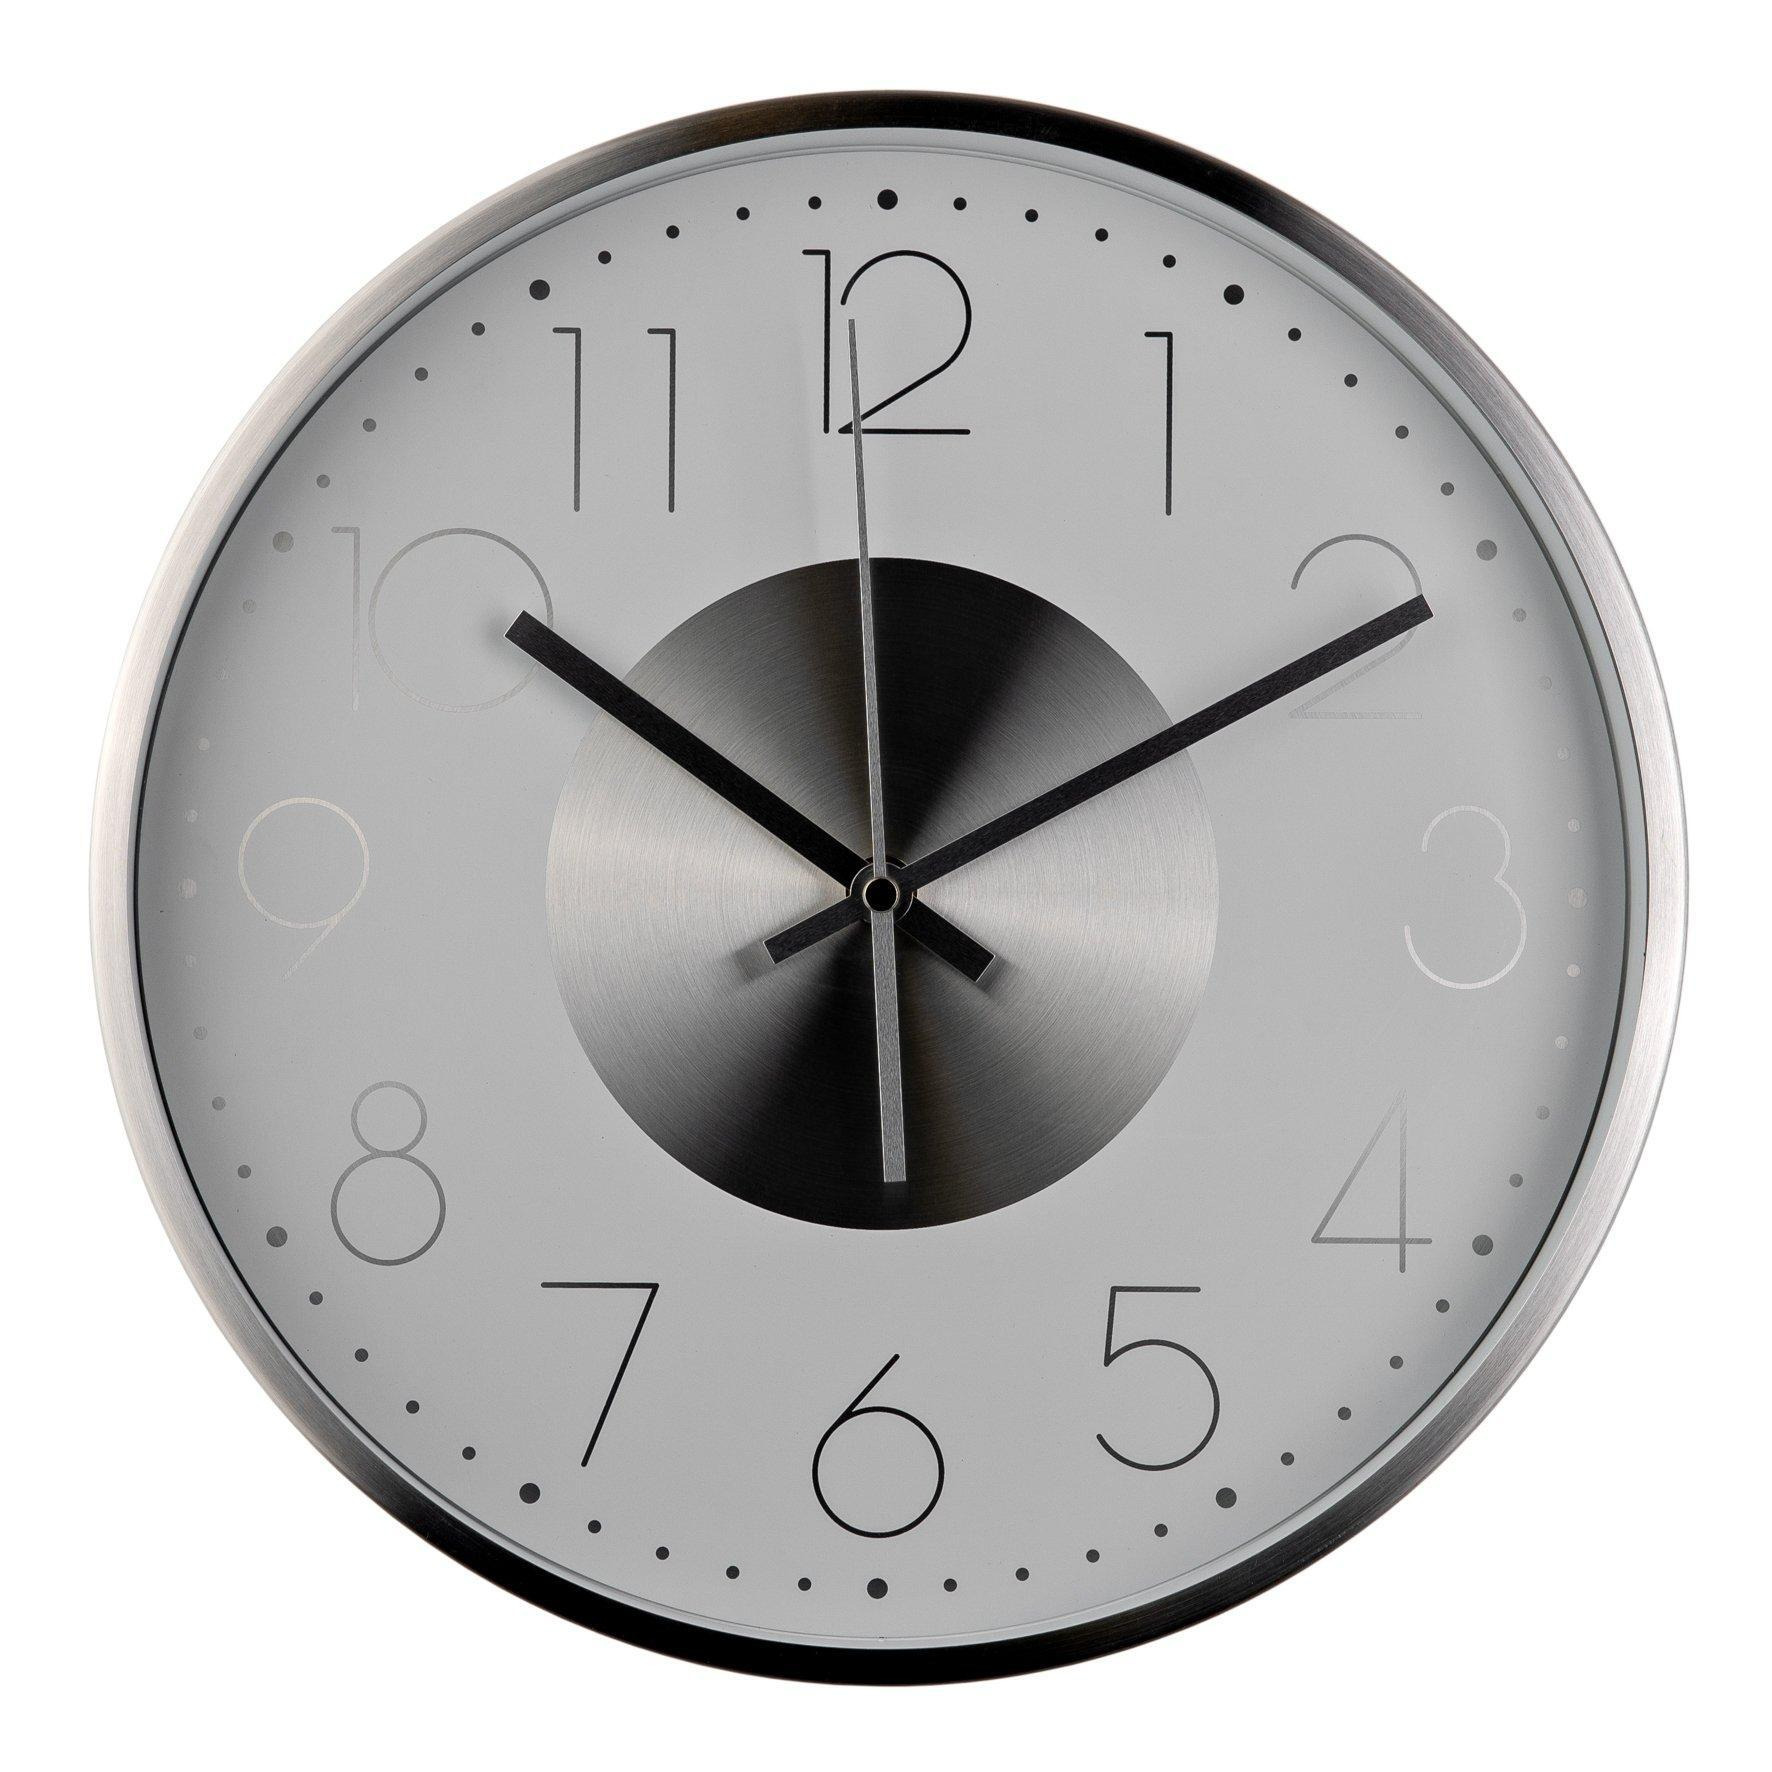 "Hometime Round Metal Wall Clock Metal Dial 12"" - Silver" - image 1